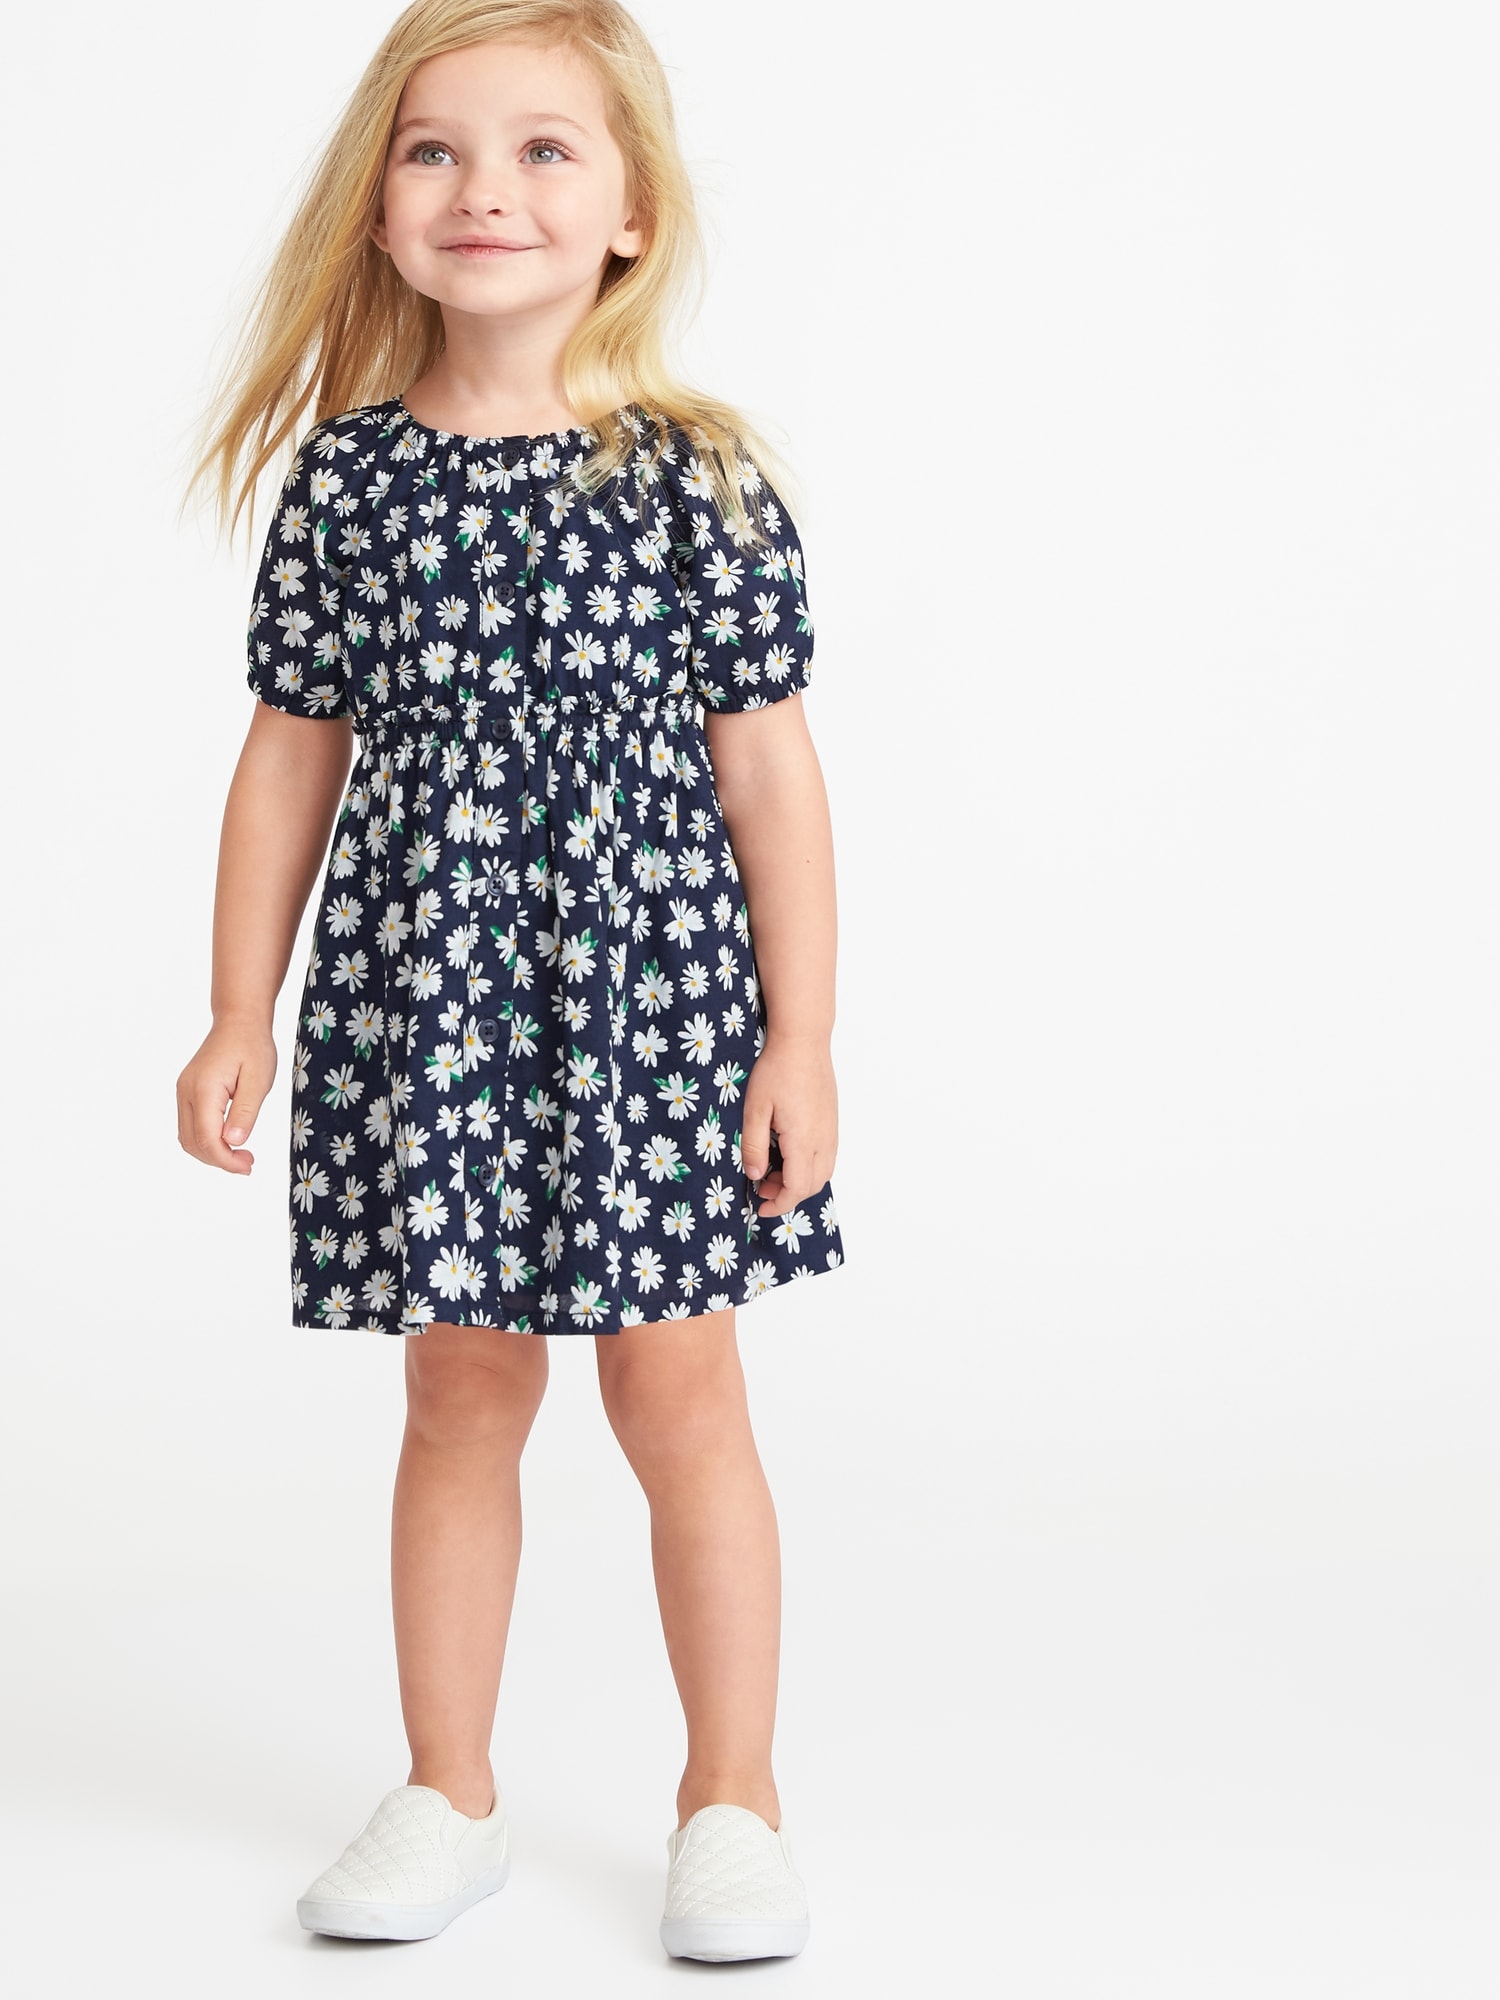 Floral-Print Shirt Dress for Toddler Girls | Old Navy